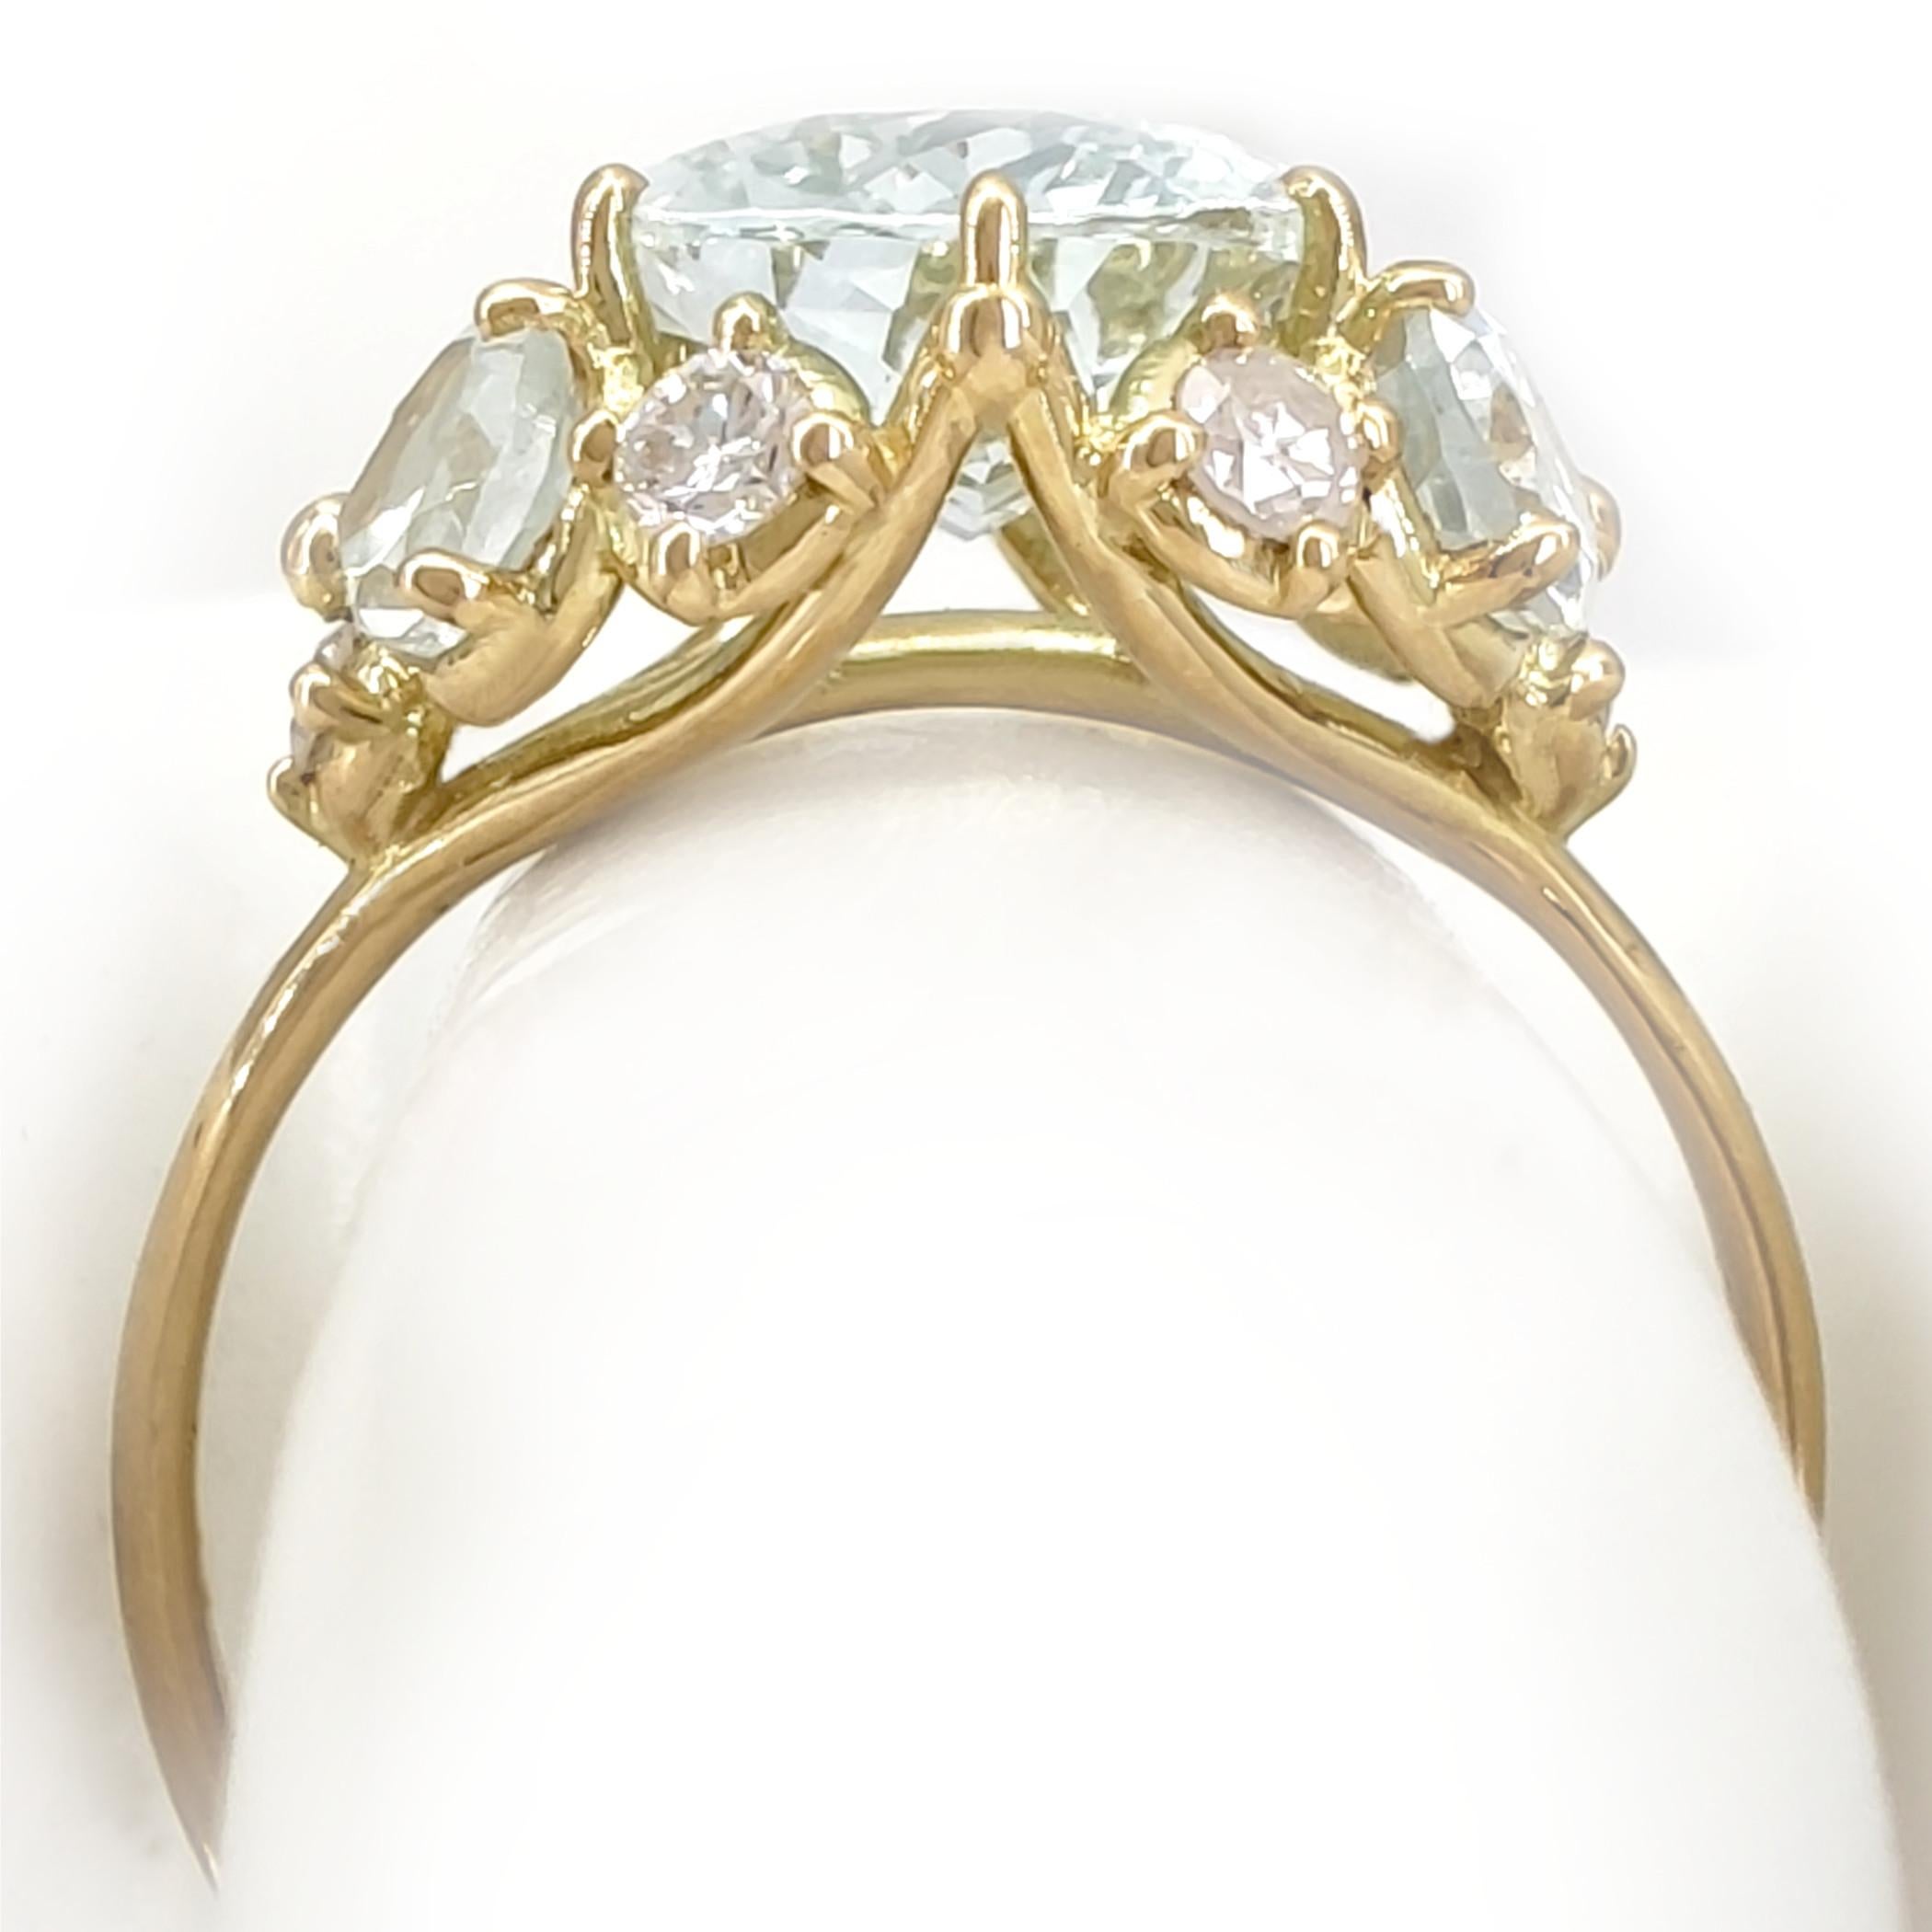 2, 69ct Oval Cut Aquamarine Engagement Ring, 18k Yellow Gold, Resizable 2